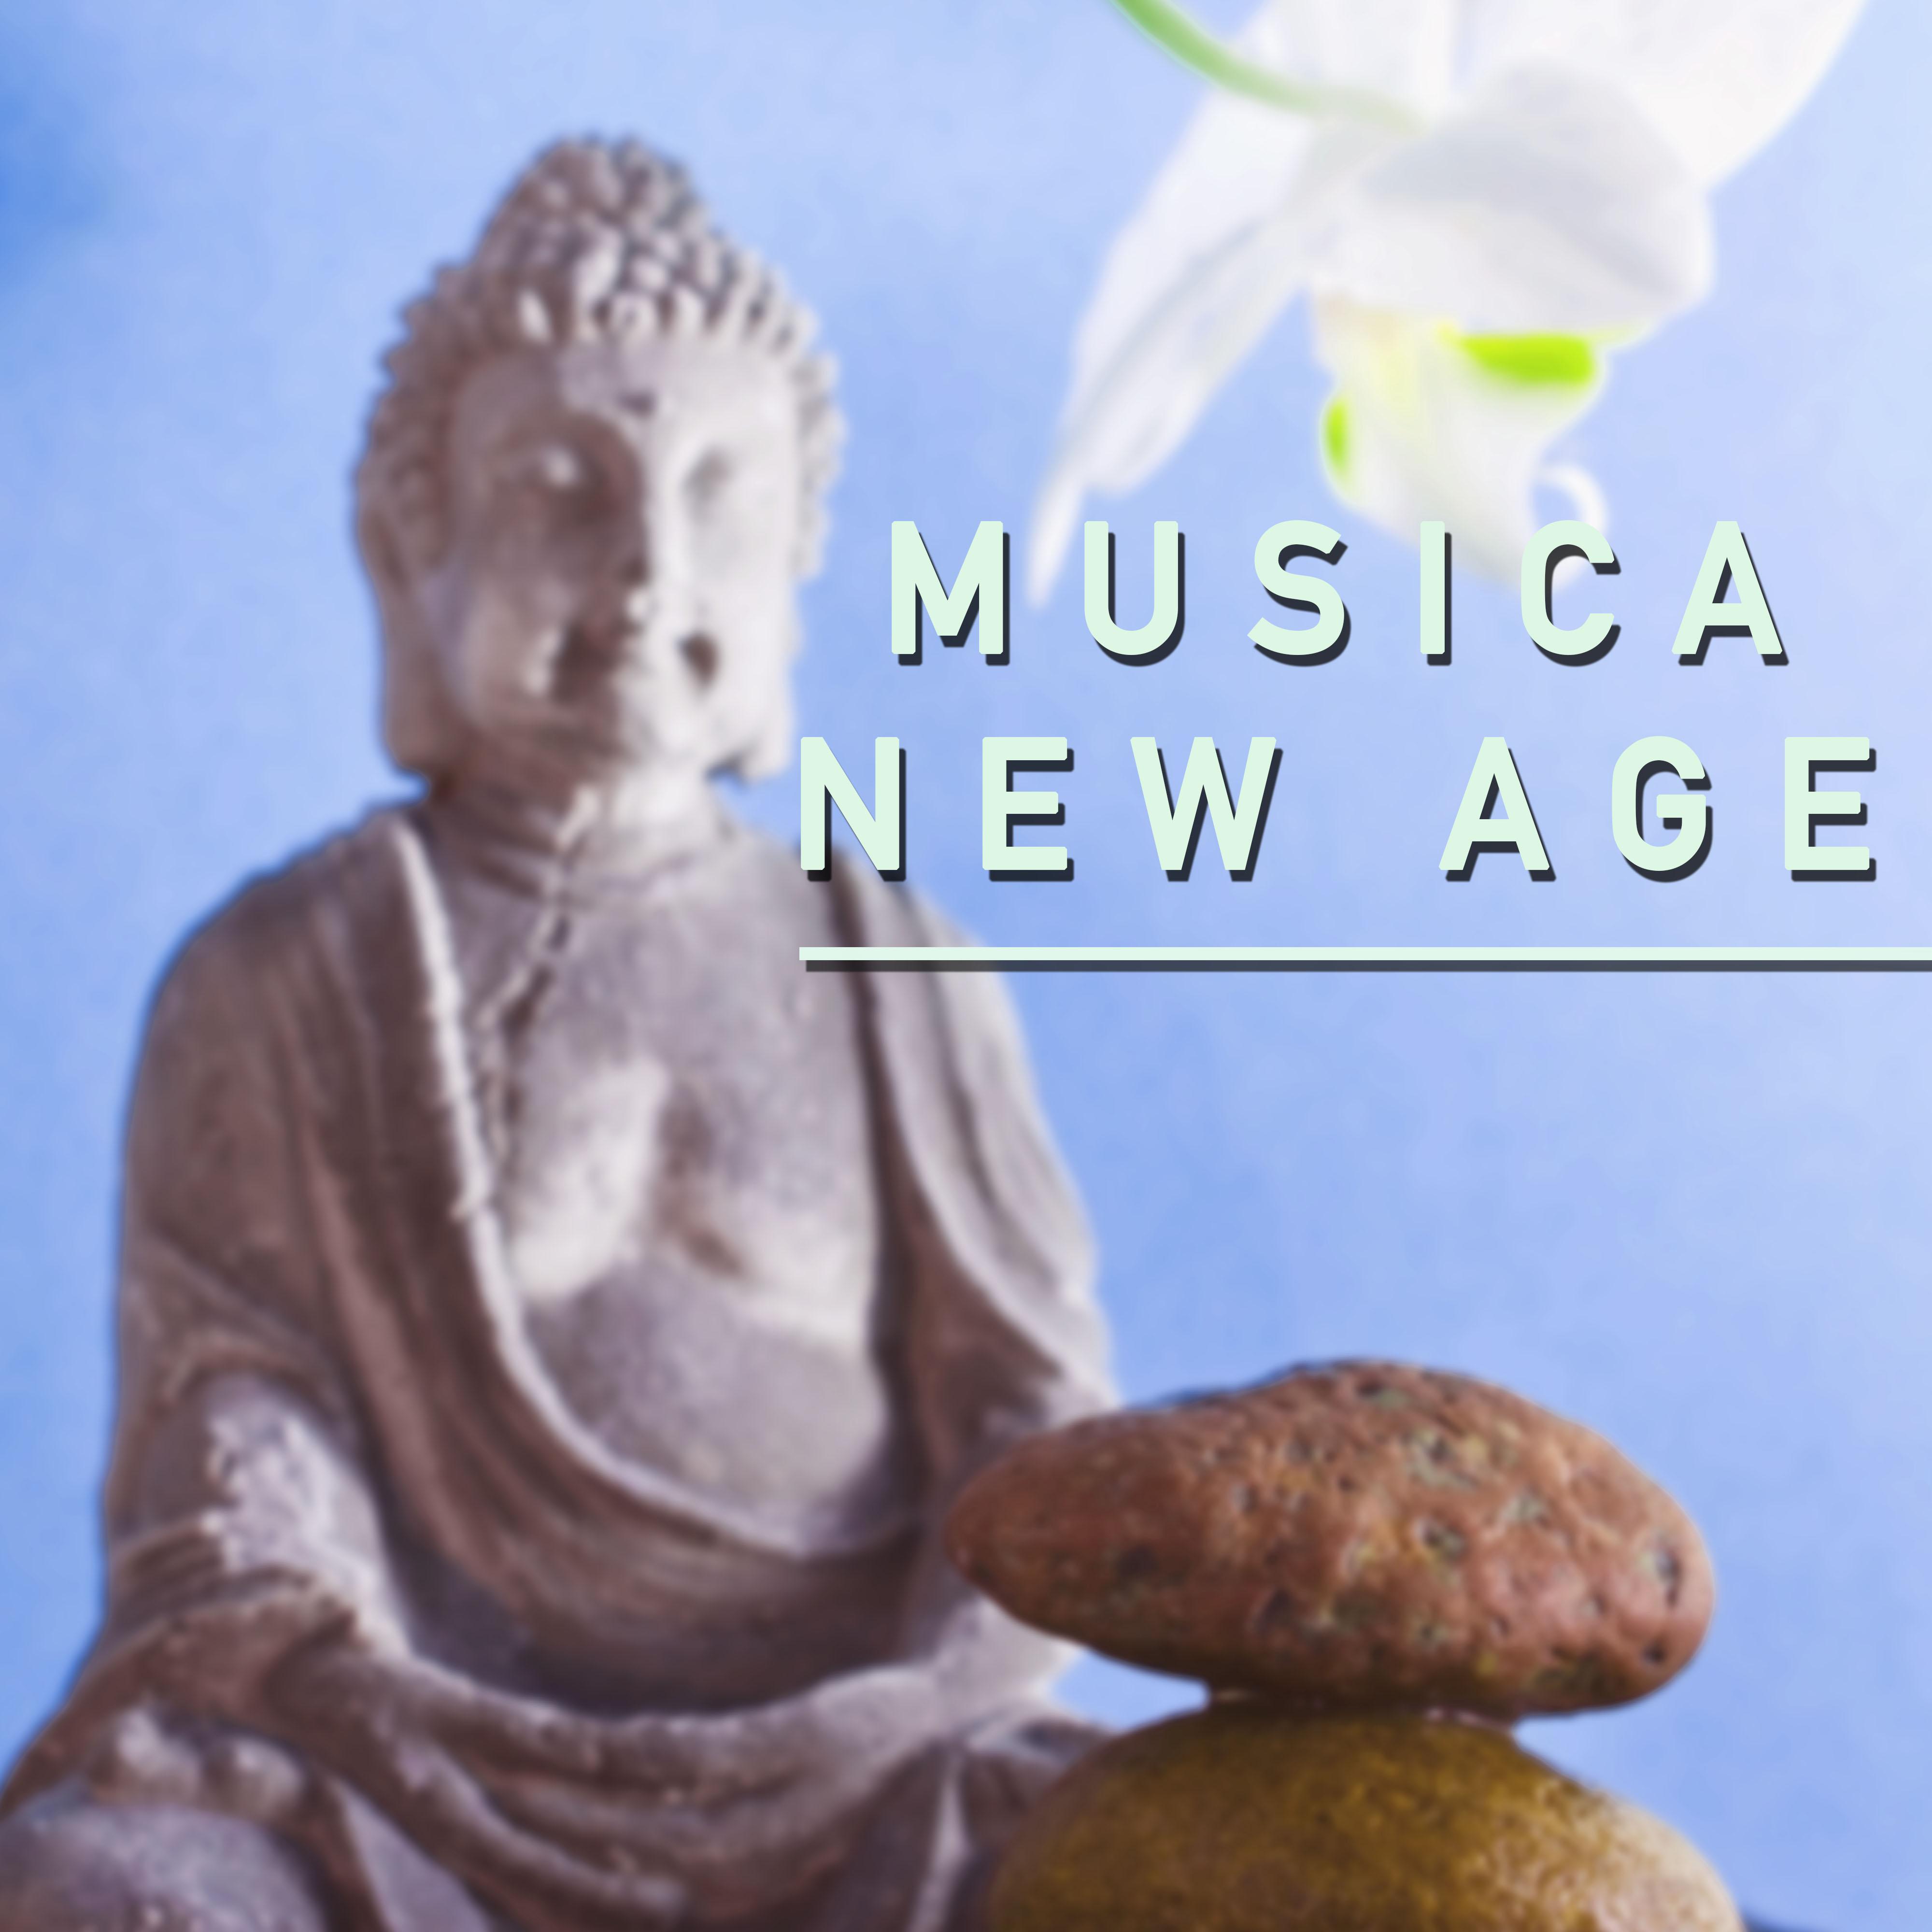 Musica New Age con Sonidos de la Naturaleza